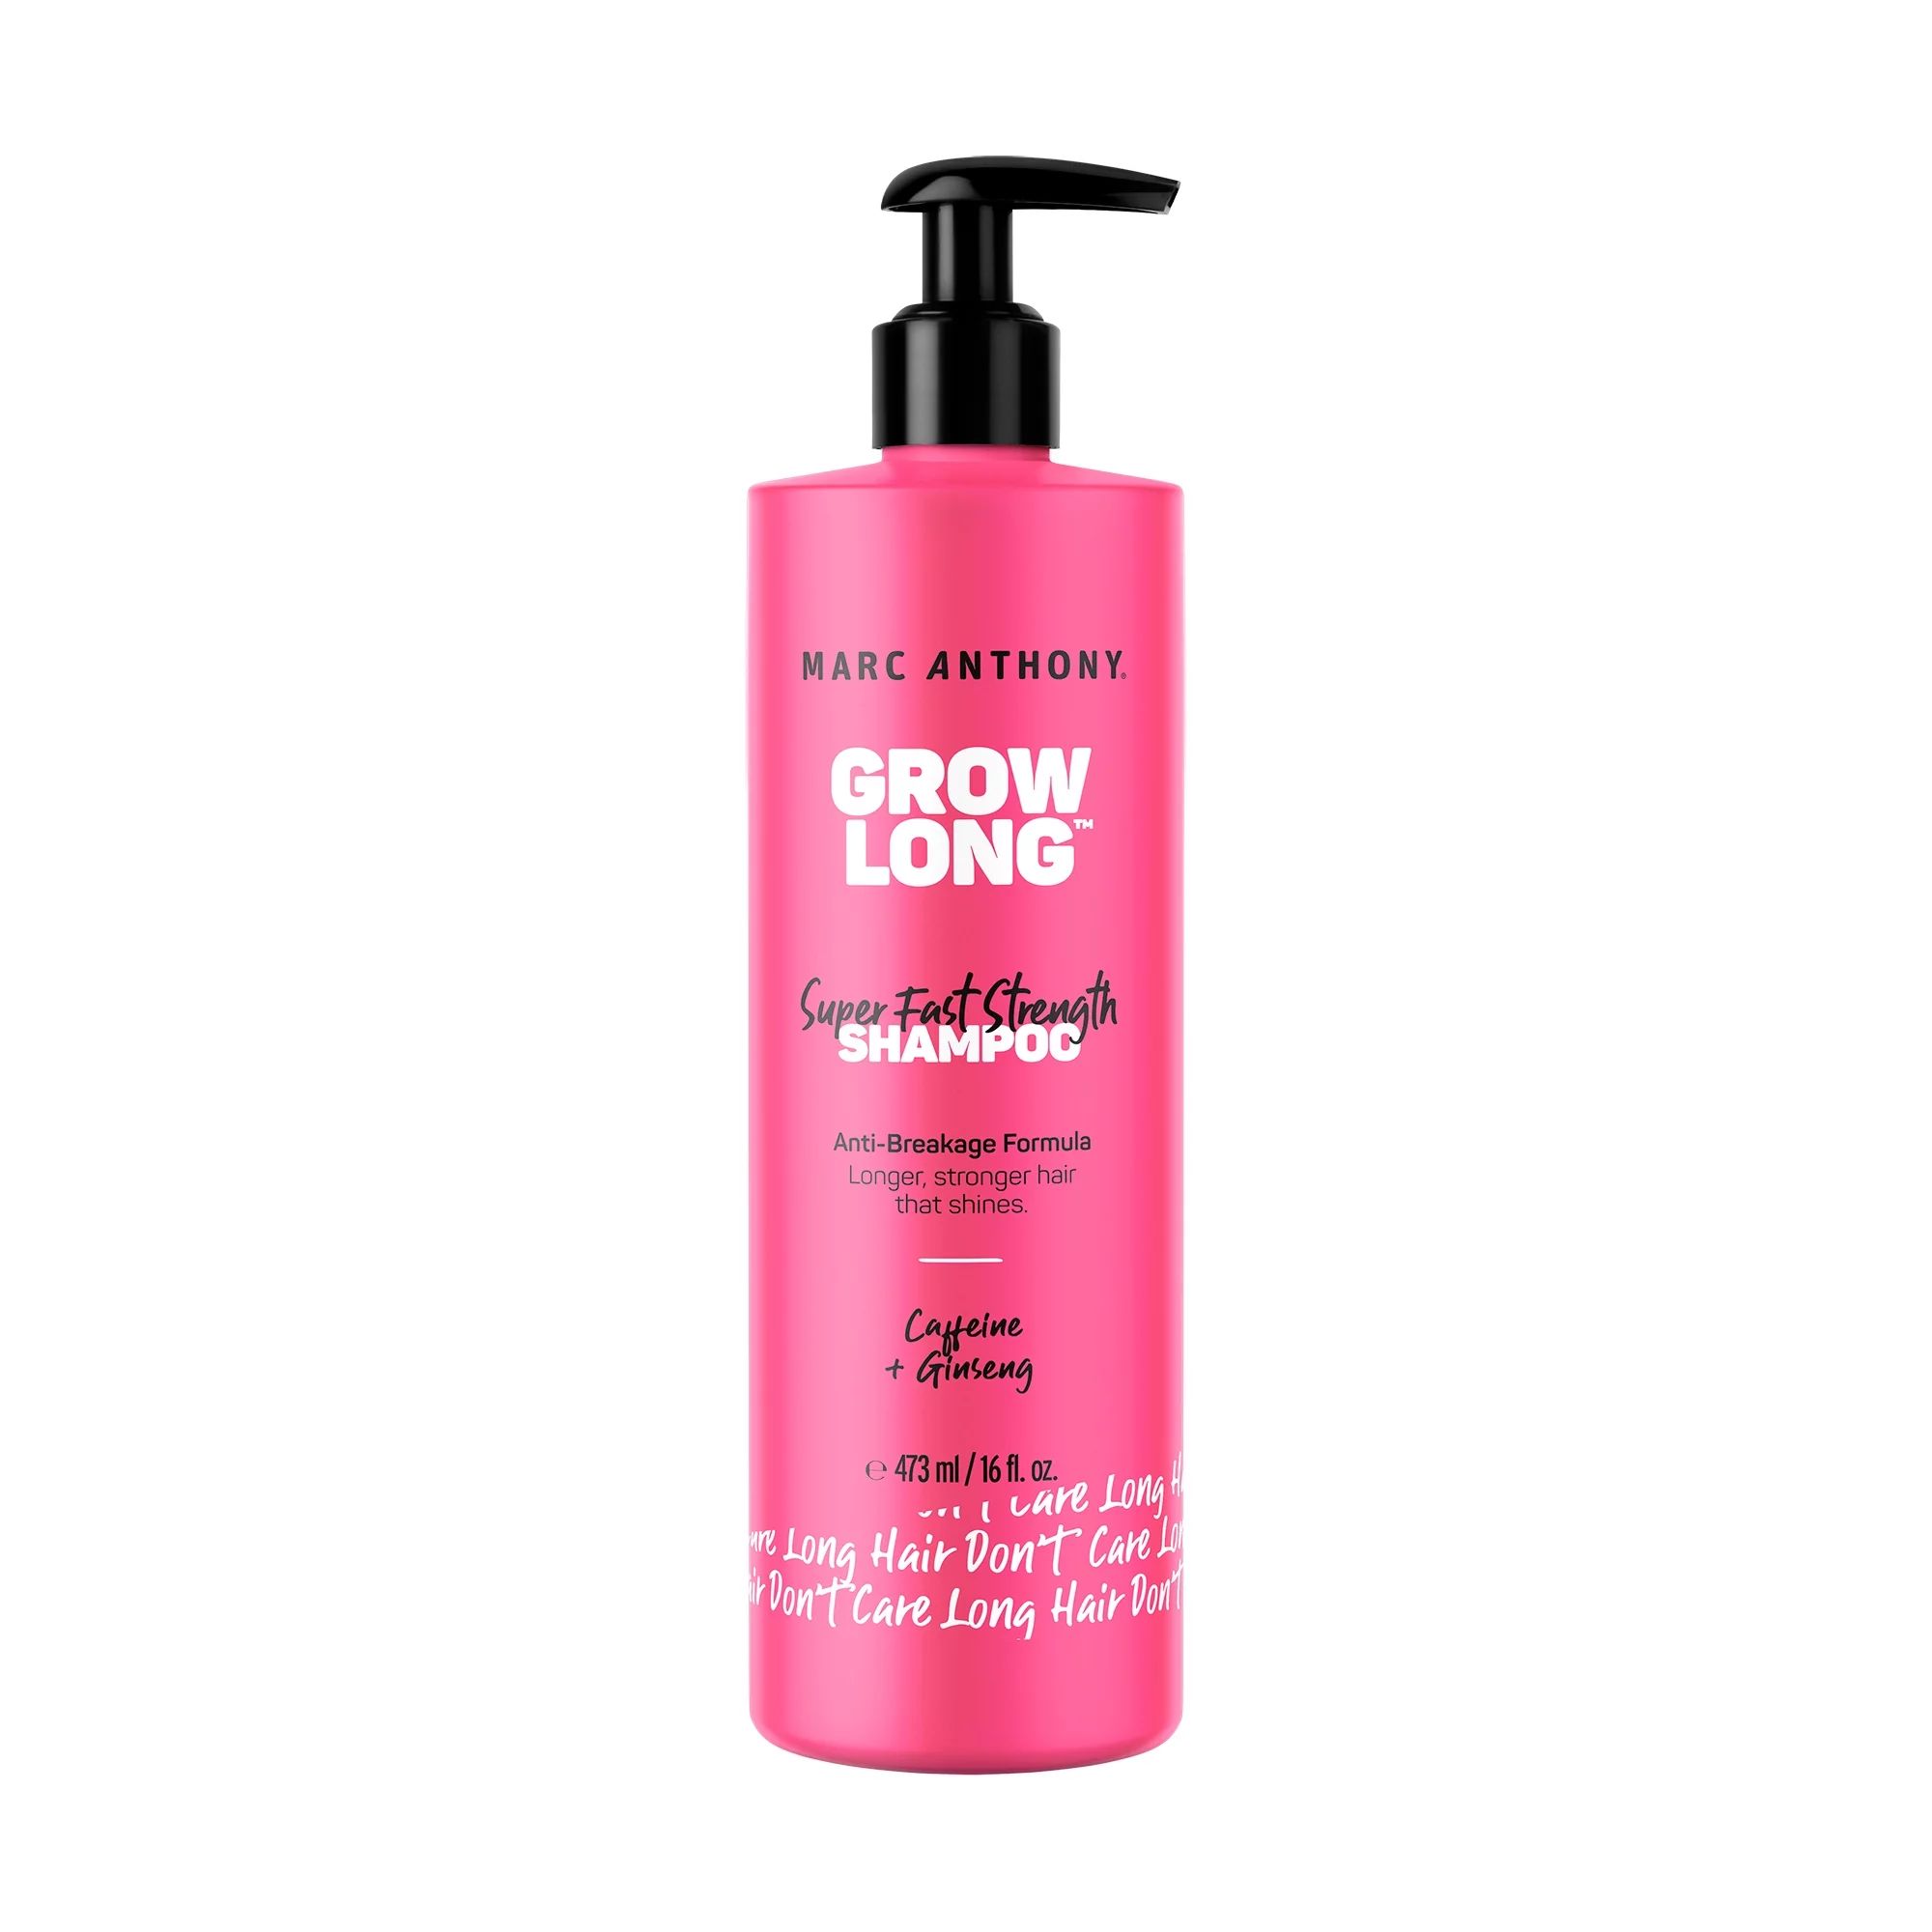 Marc Anthony Grow Long Super Fast Strength Shampoo with Caffeine & Ginseng, 16 fl oz | Walmart (US)